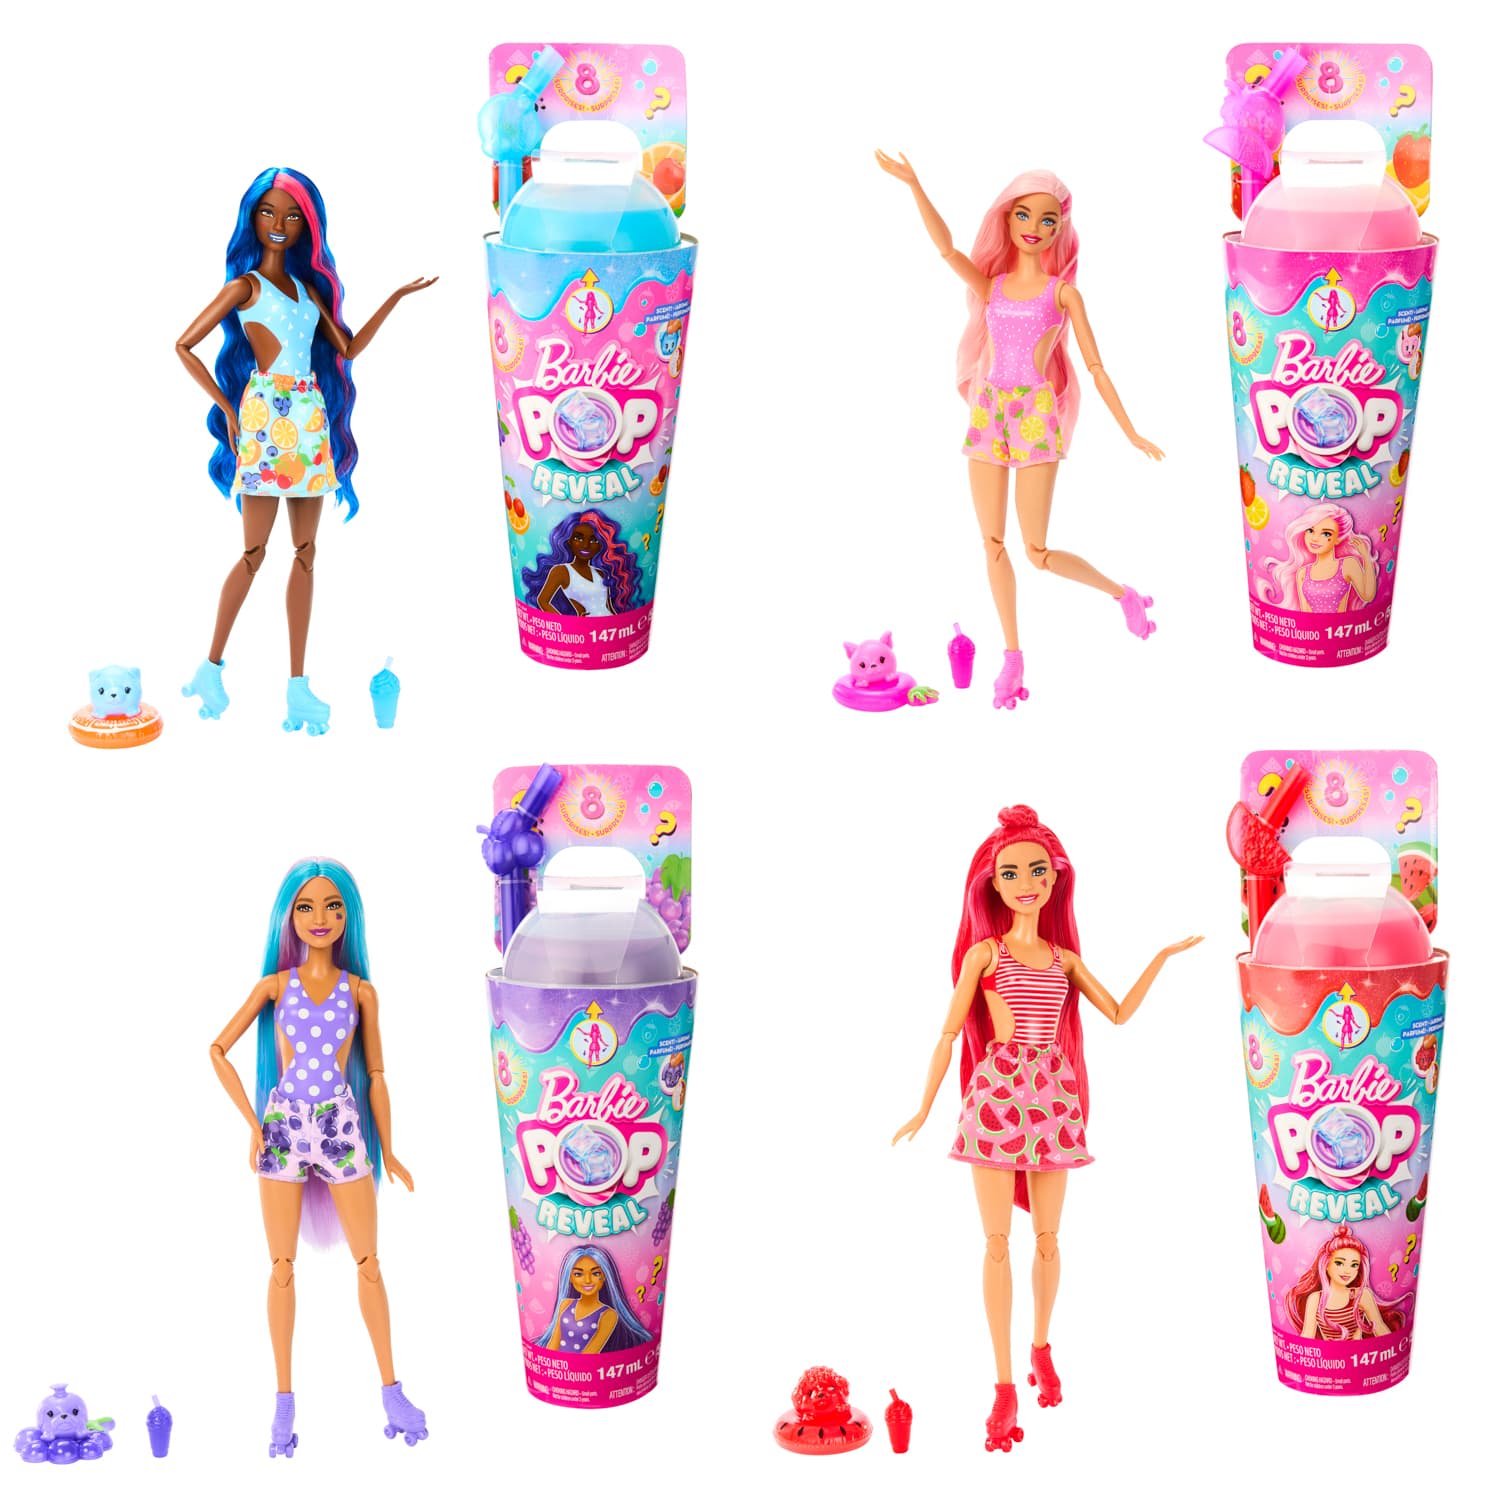 Barbie Pop Reveal Dolls, Fruit Series